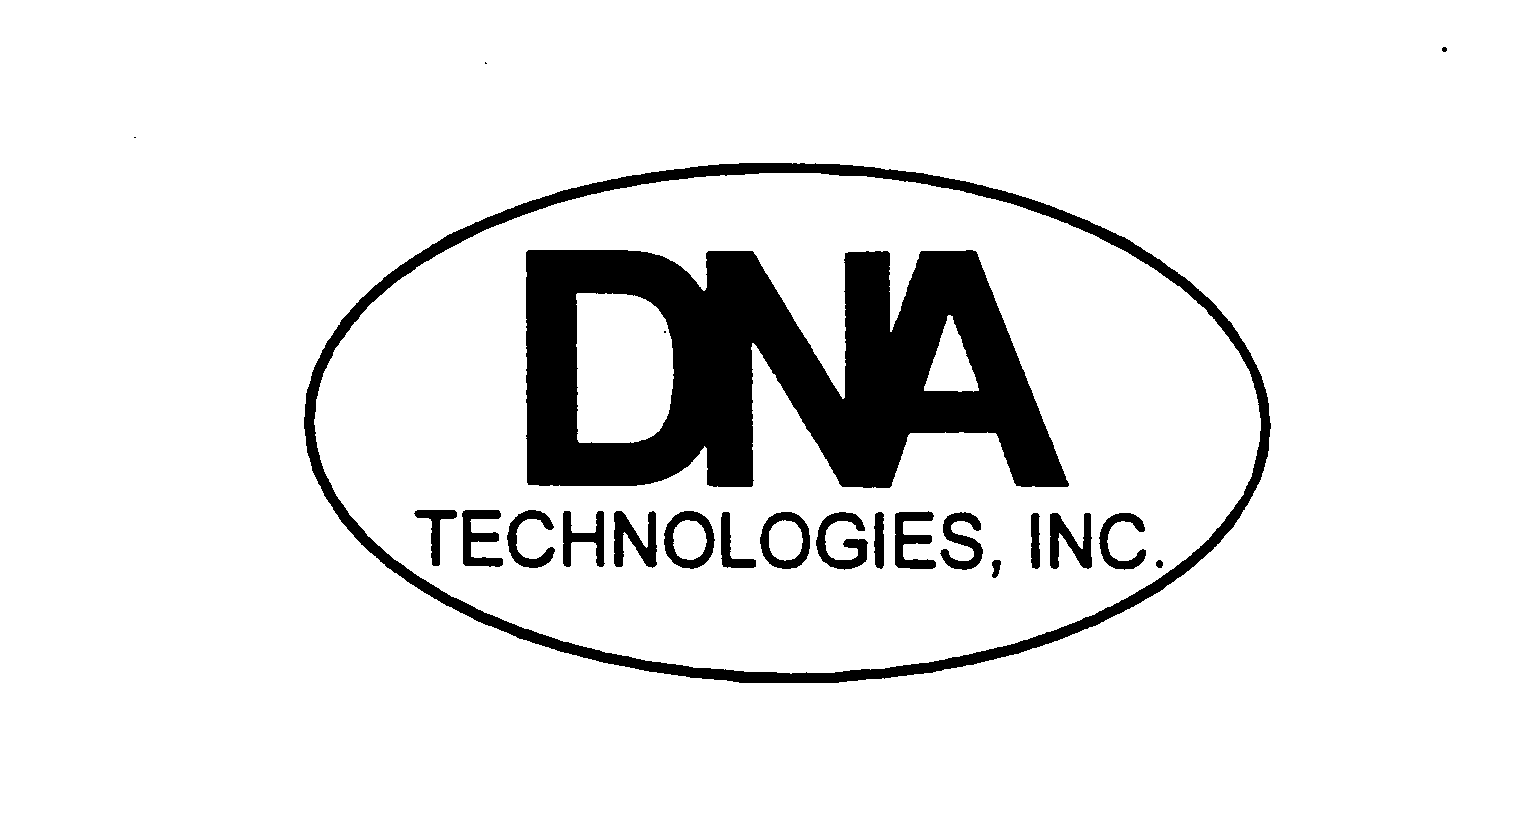  DNA TECHNOLOGIES, INC.